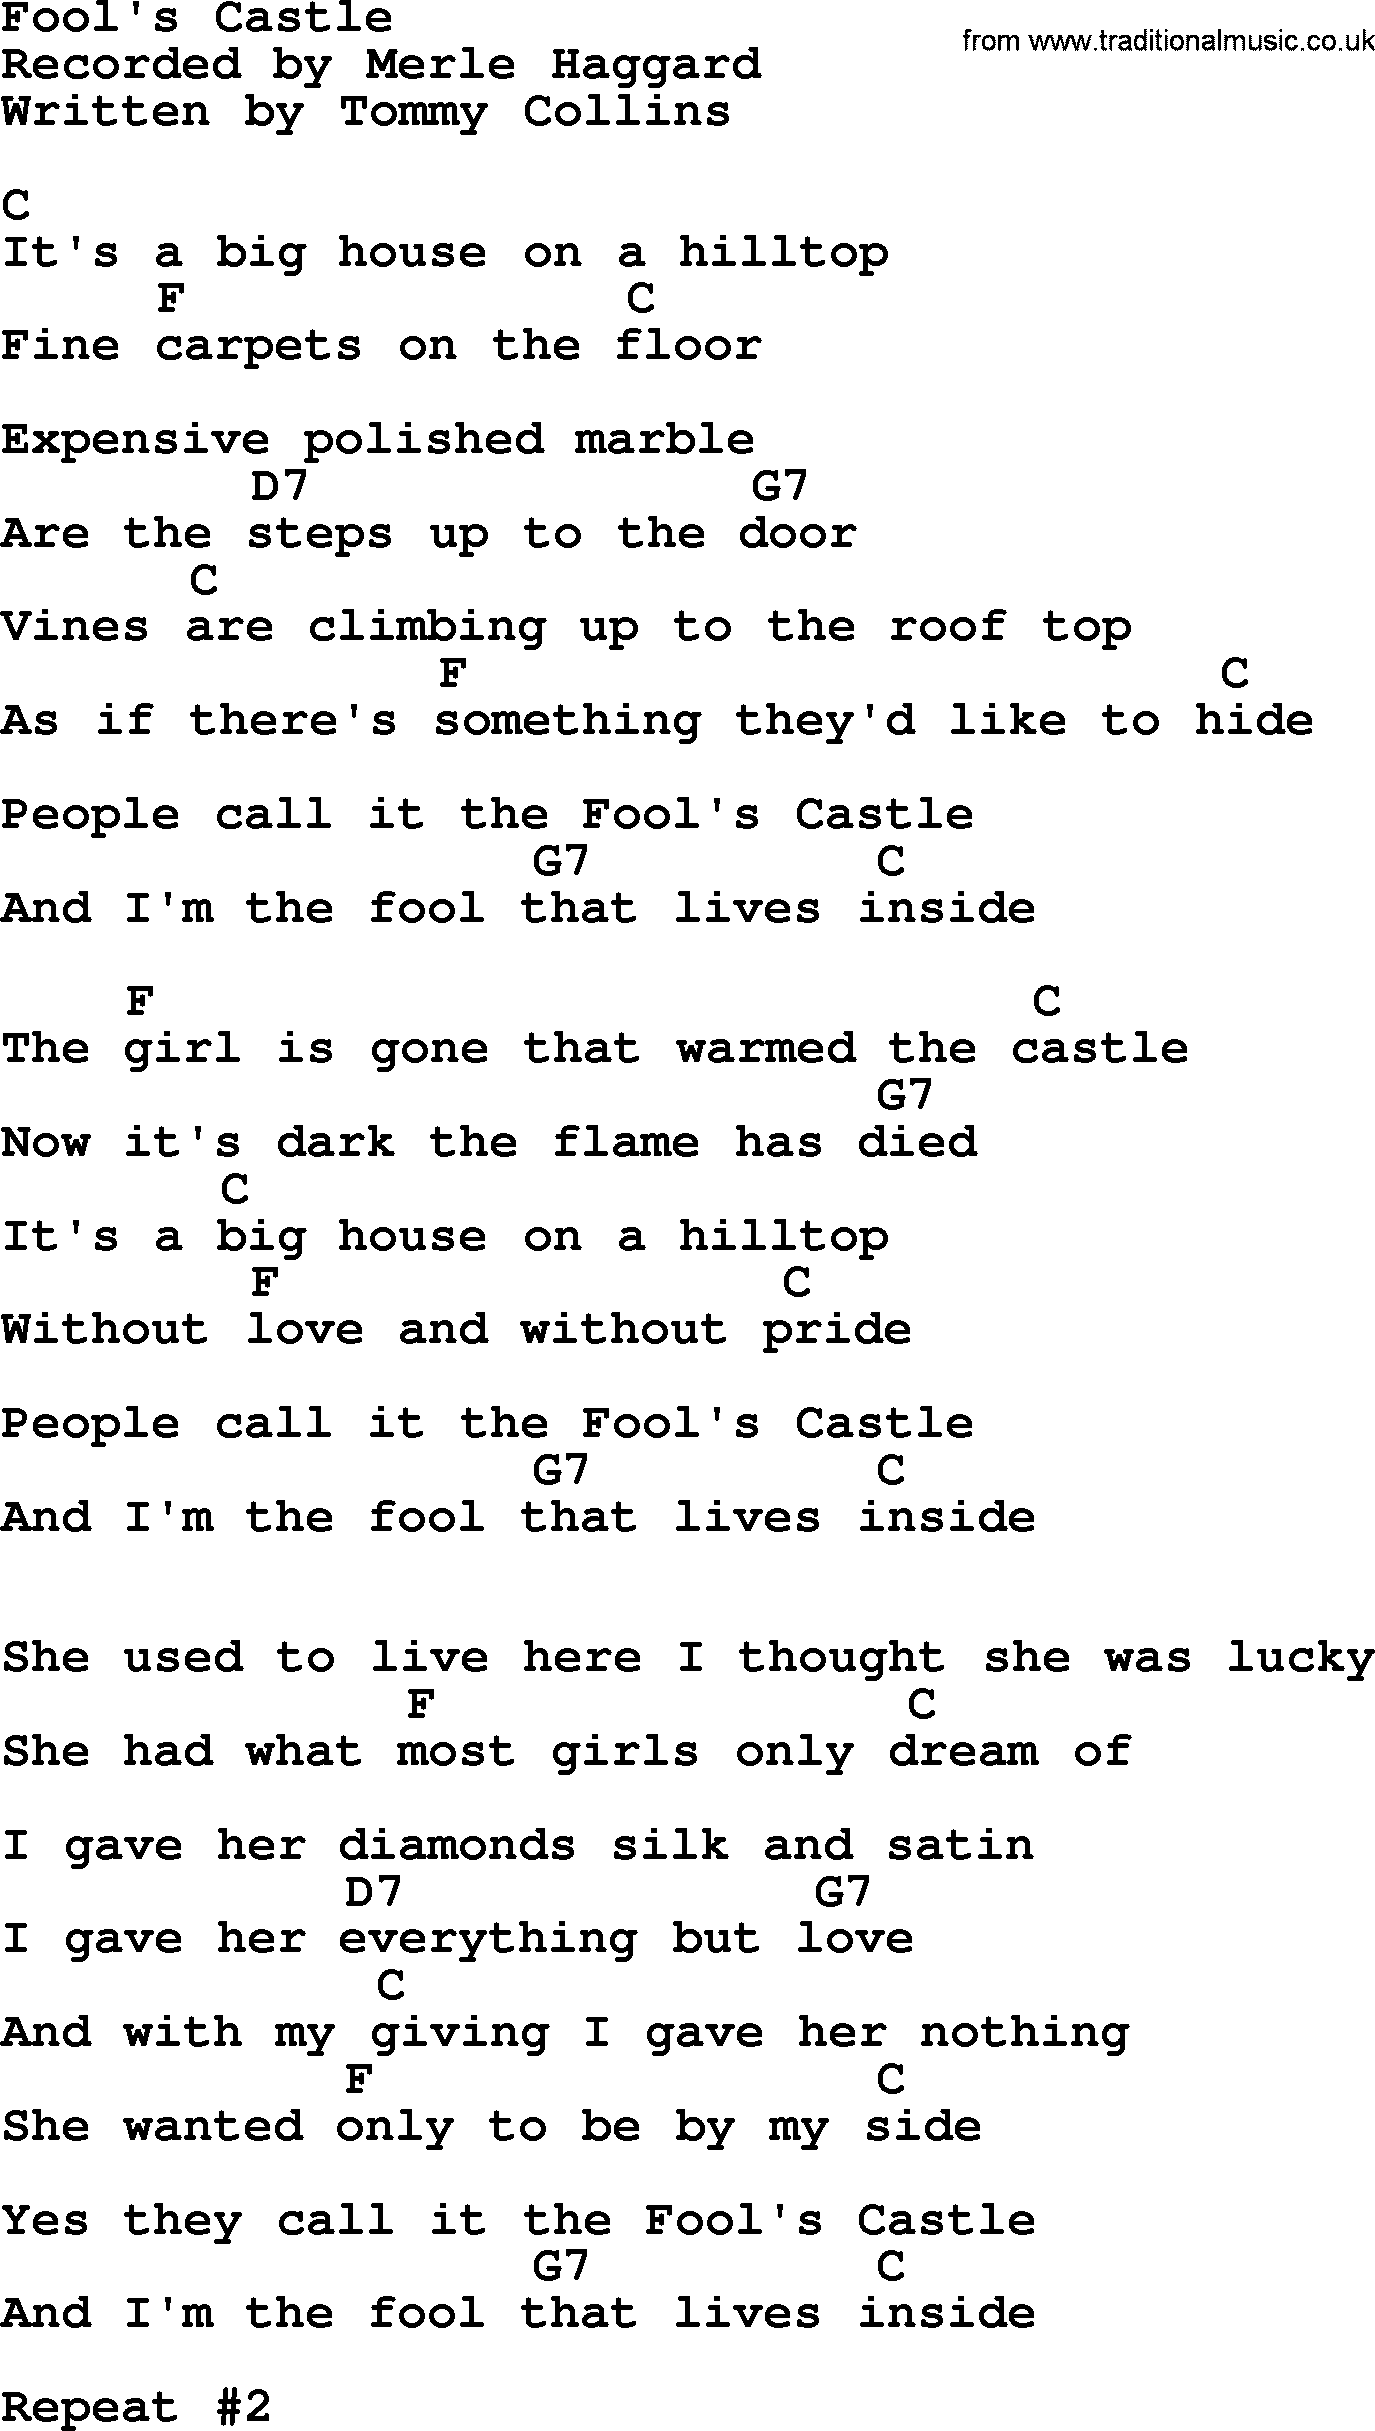 Merle Haggard song: Fool's Castle, lyrics and chords